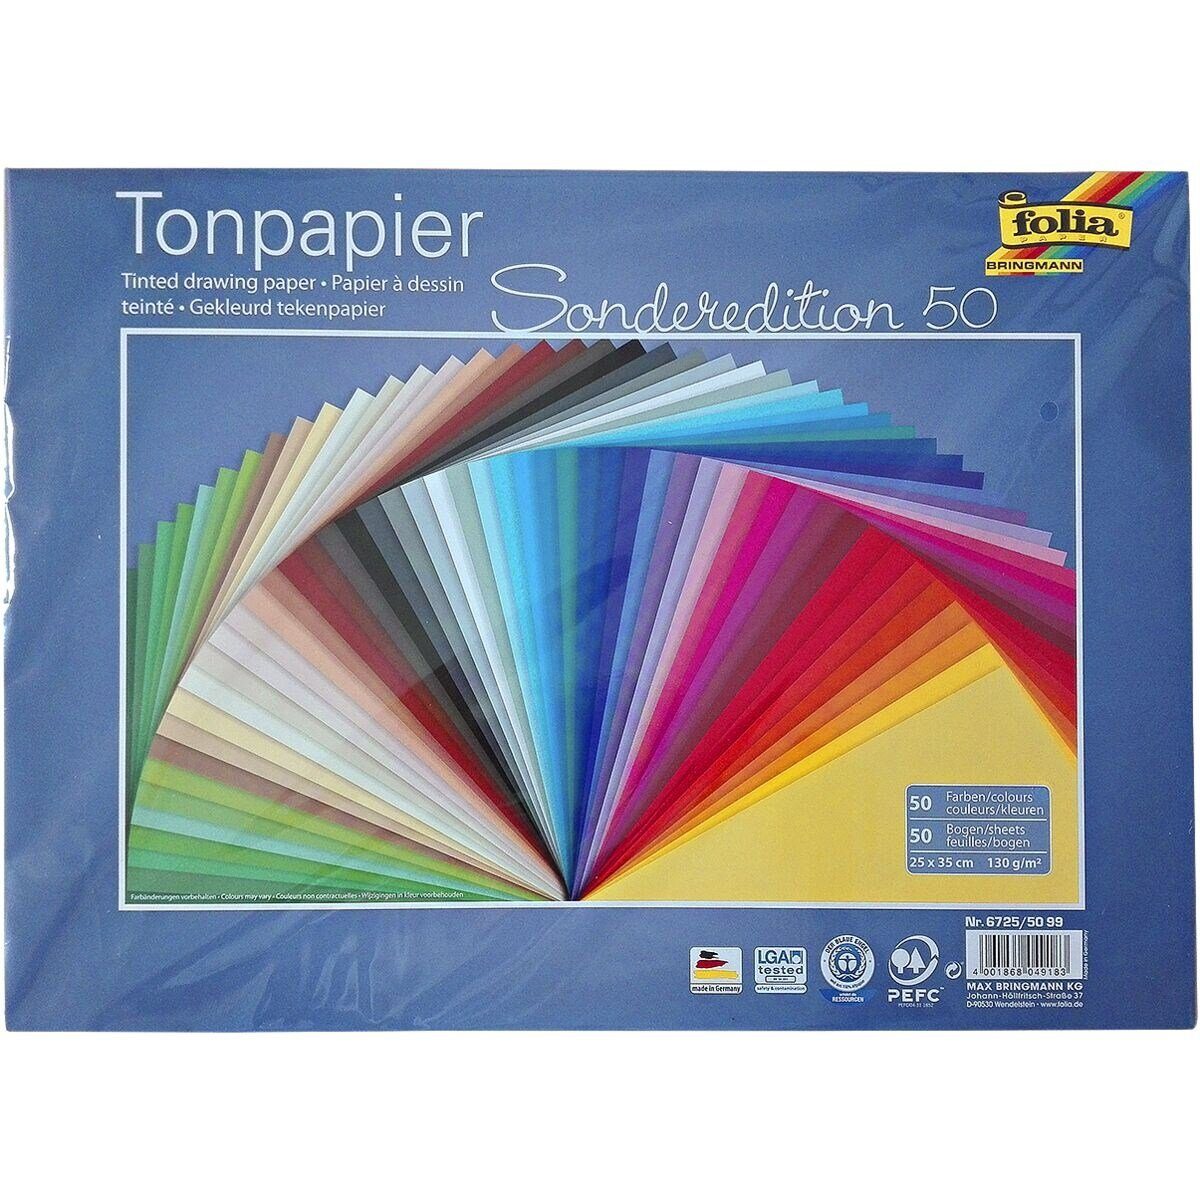 in 50 50 25x35 g/m², 130 cm, Sonderedition Tonpapier Folia Blatt 50, Bastelkartonpapier Farben, Format